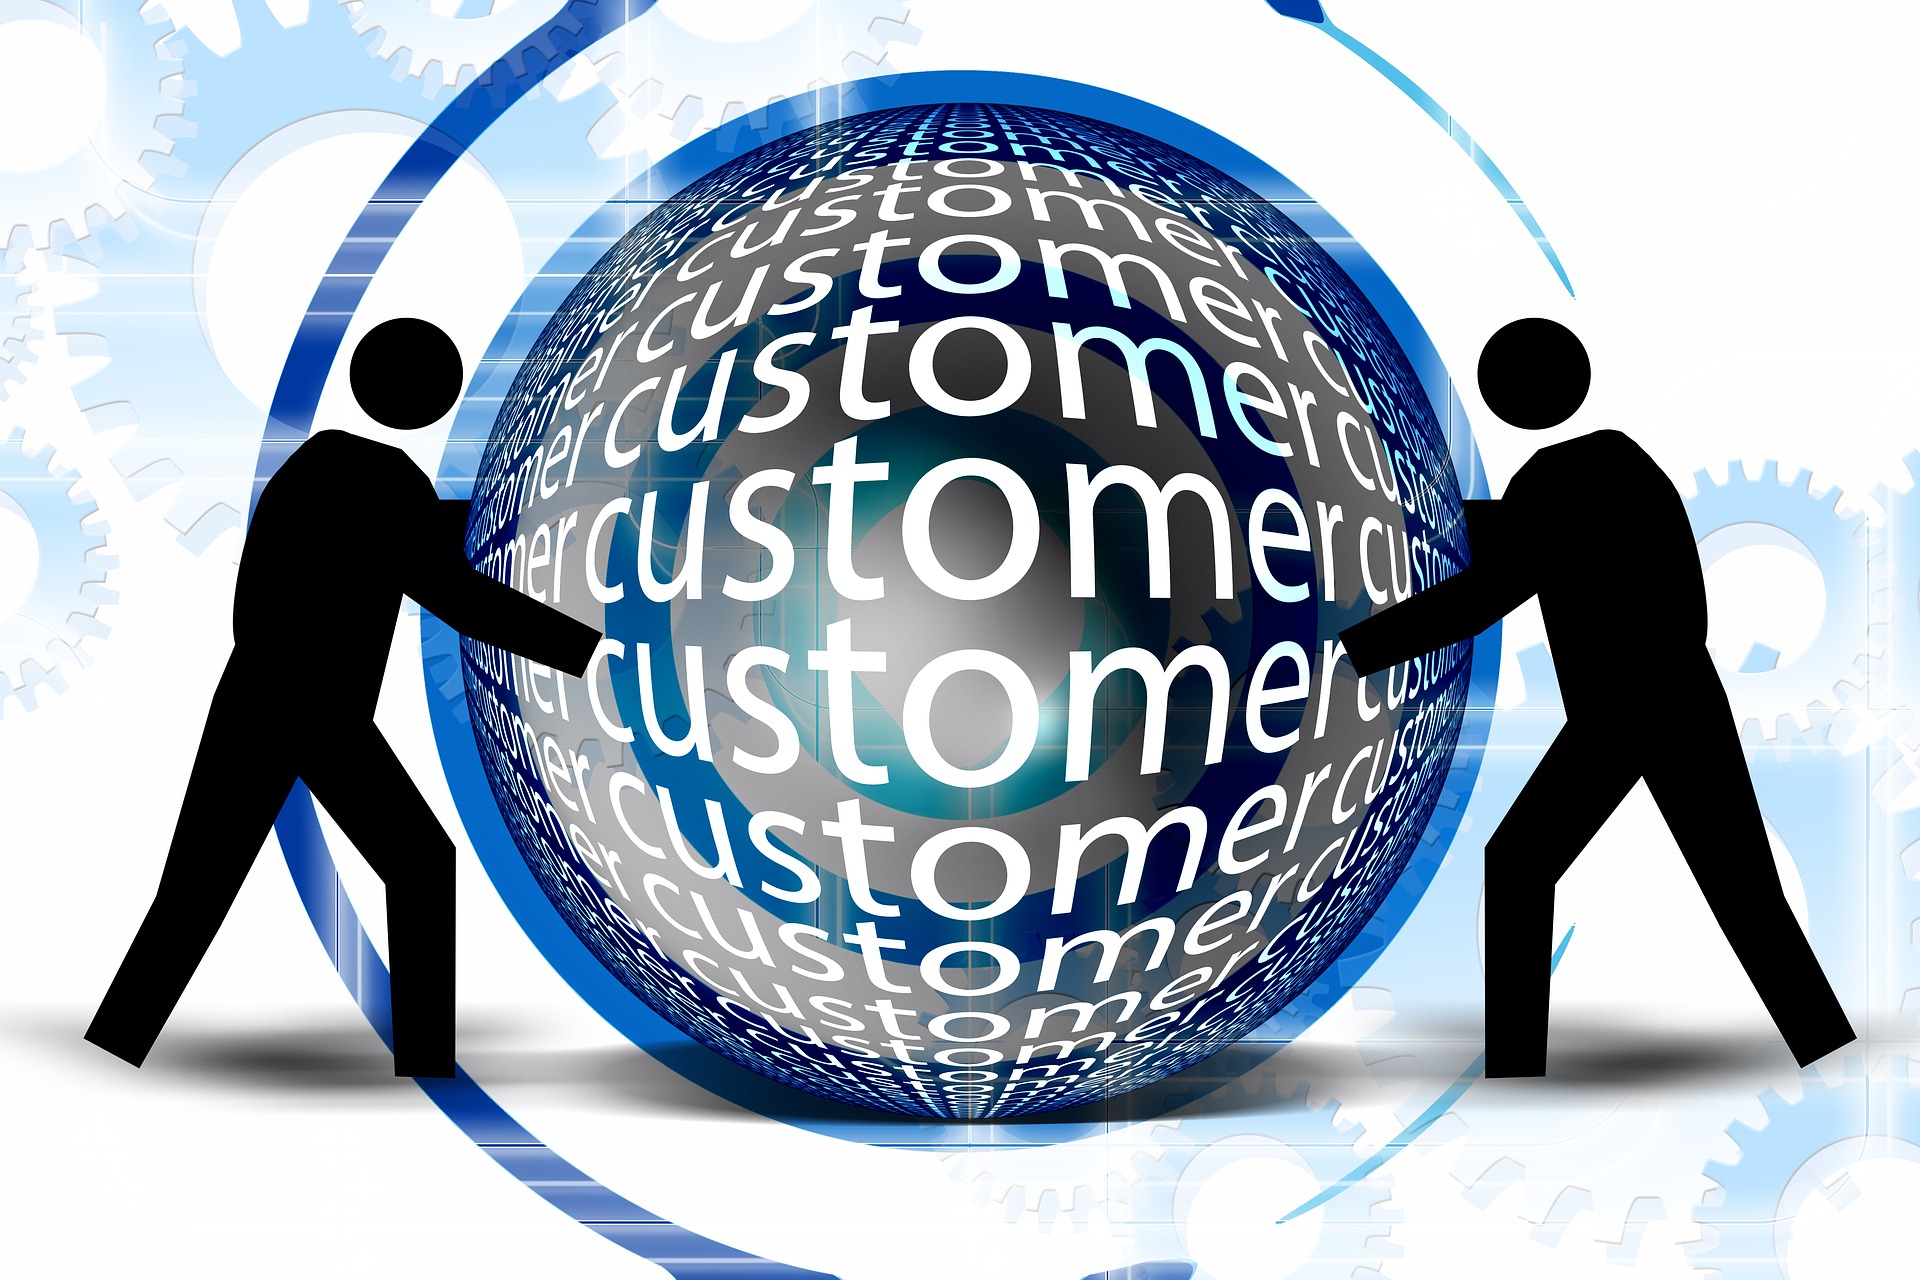 Identifying and Meeting Customer Needs